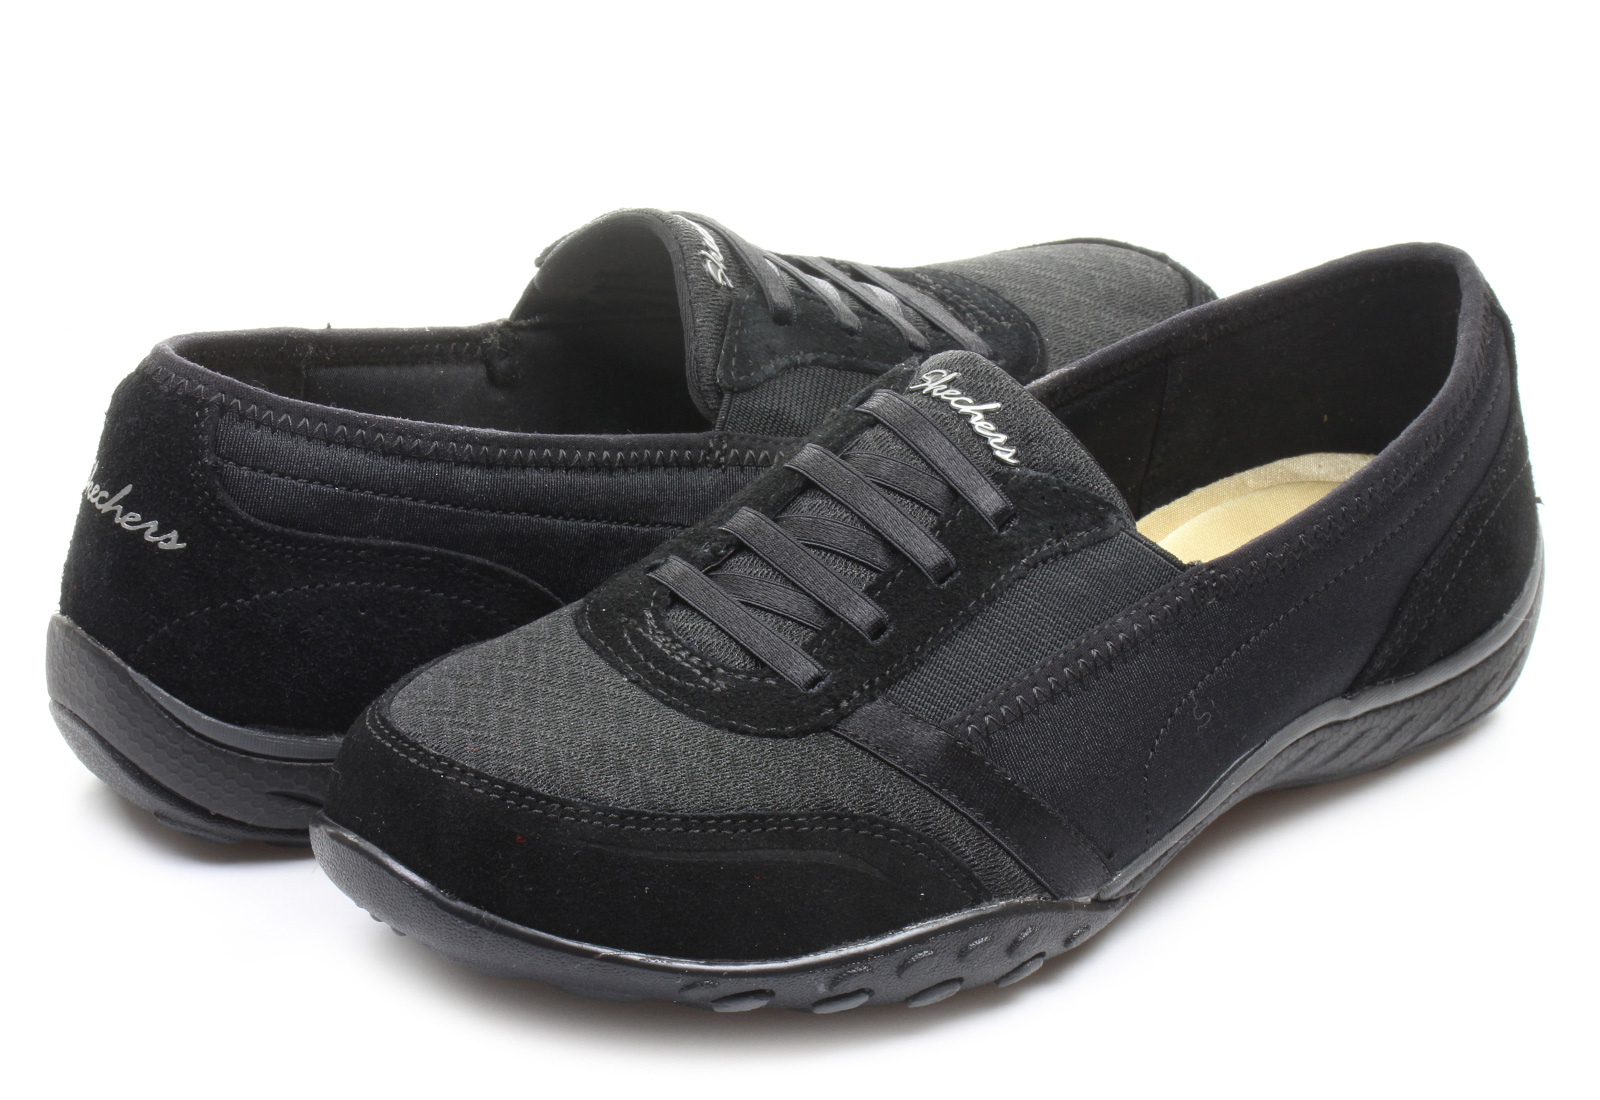 Skechers Shoes - Old Money - 22495-BBK - Online shop for sneakers ...